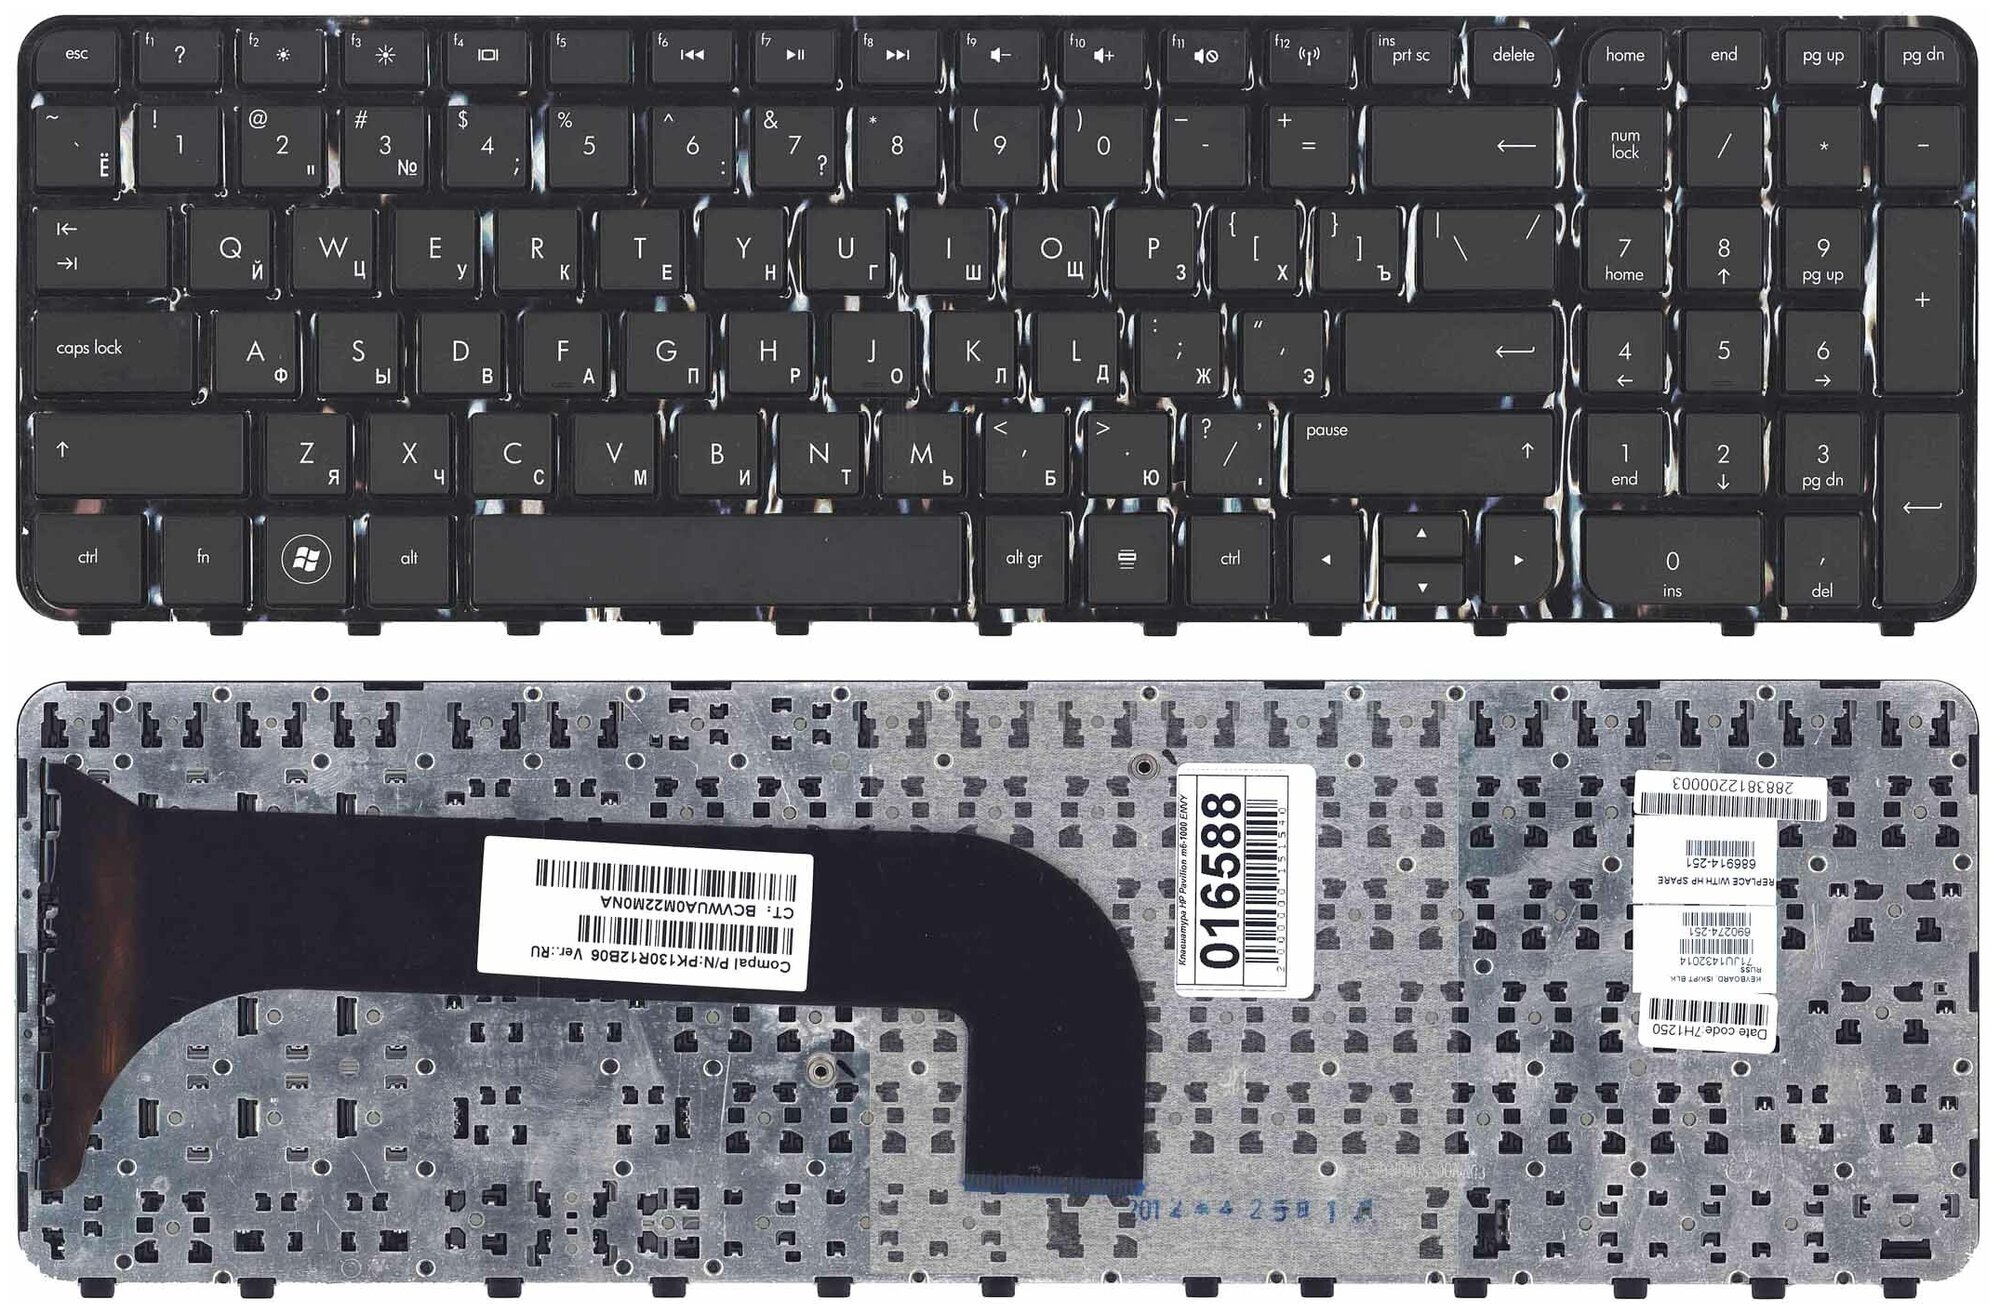 Клавиатура для ноутбука HP Pavilion M6-1000 Envy M6-1100 M6-1200 черная с рамкой